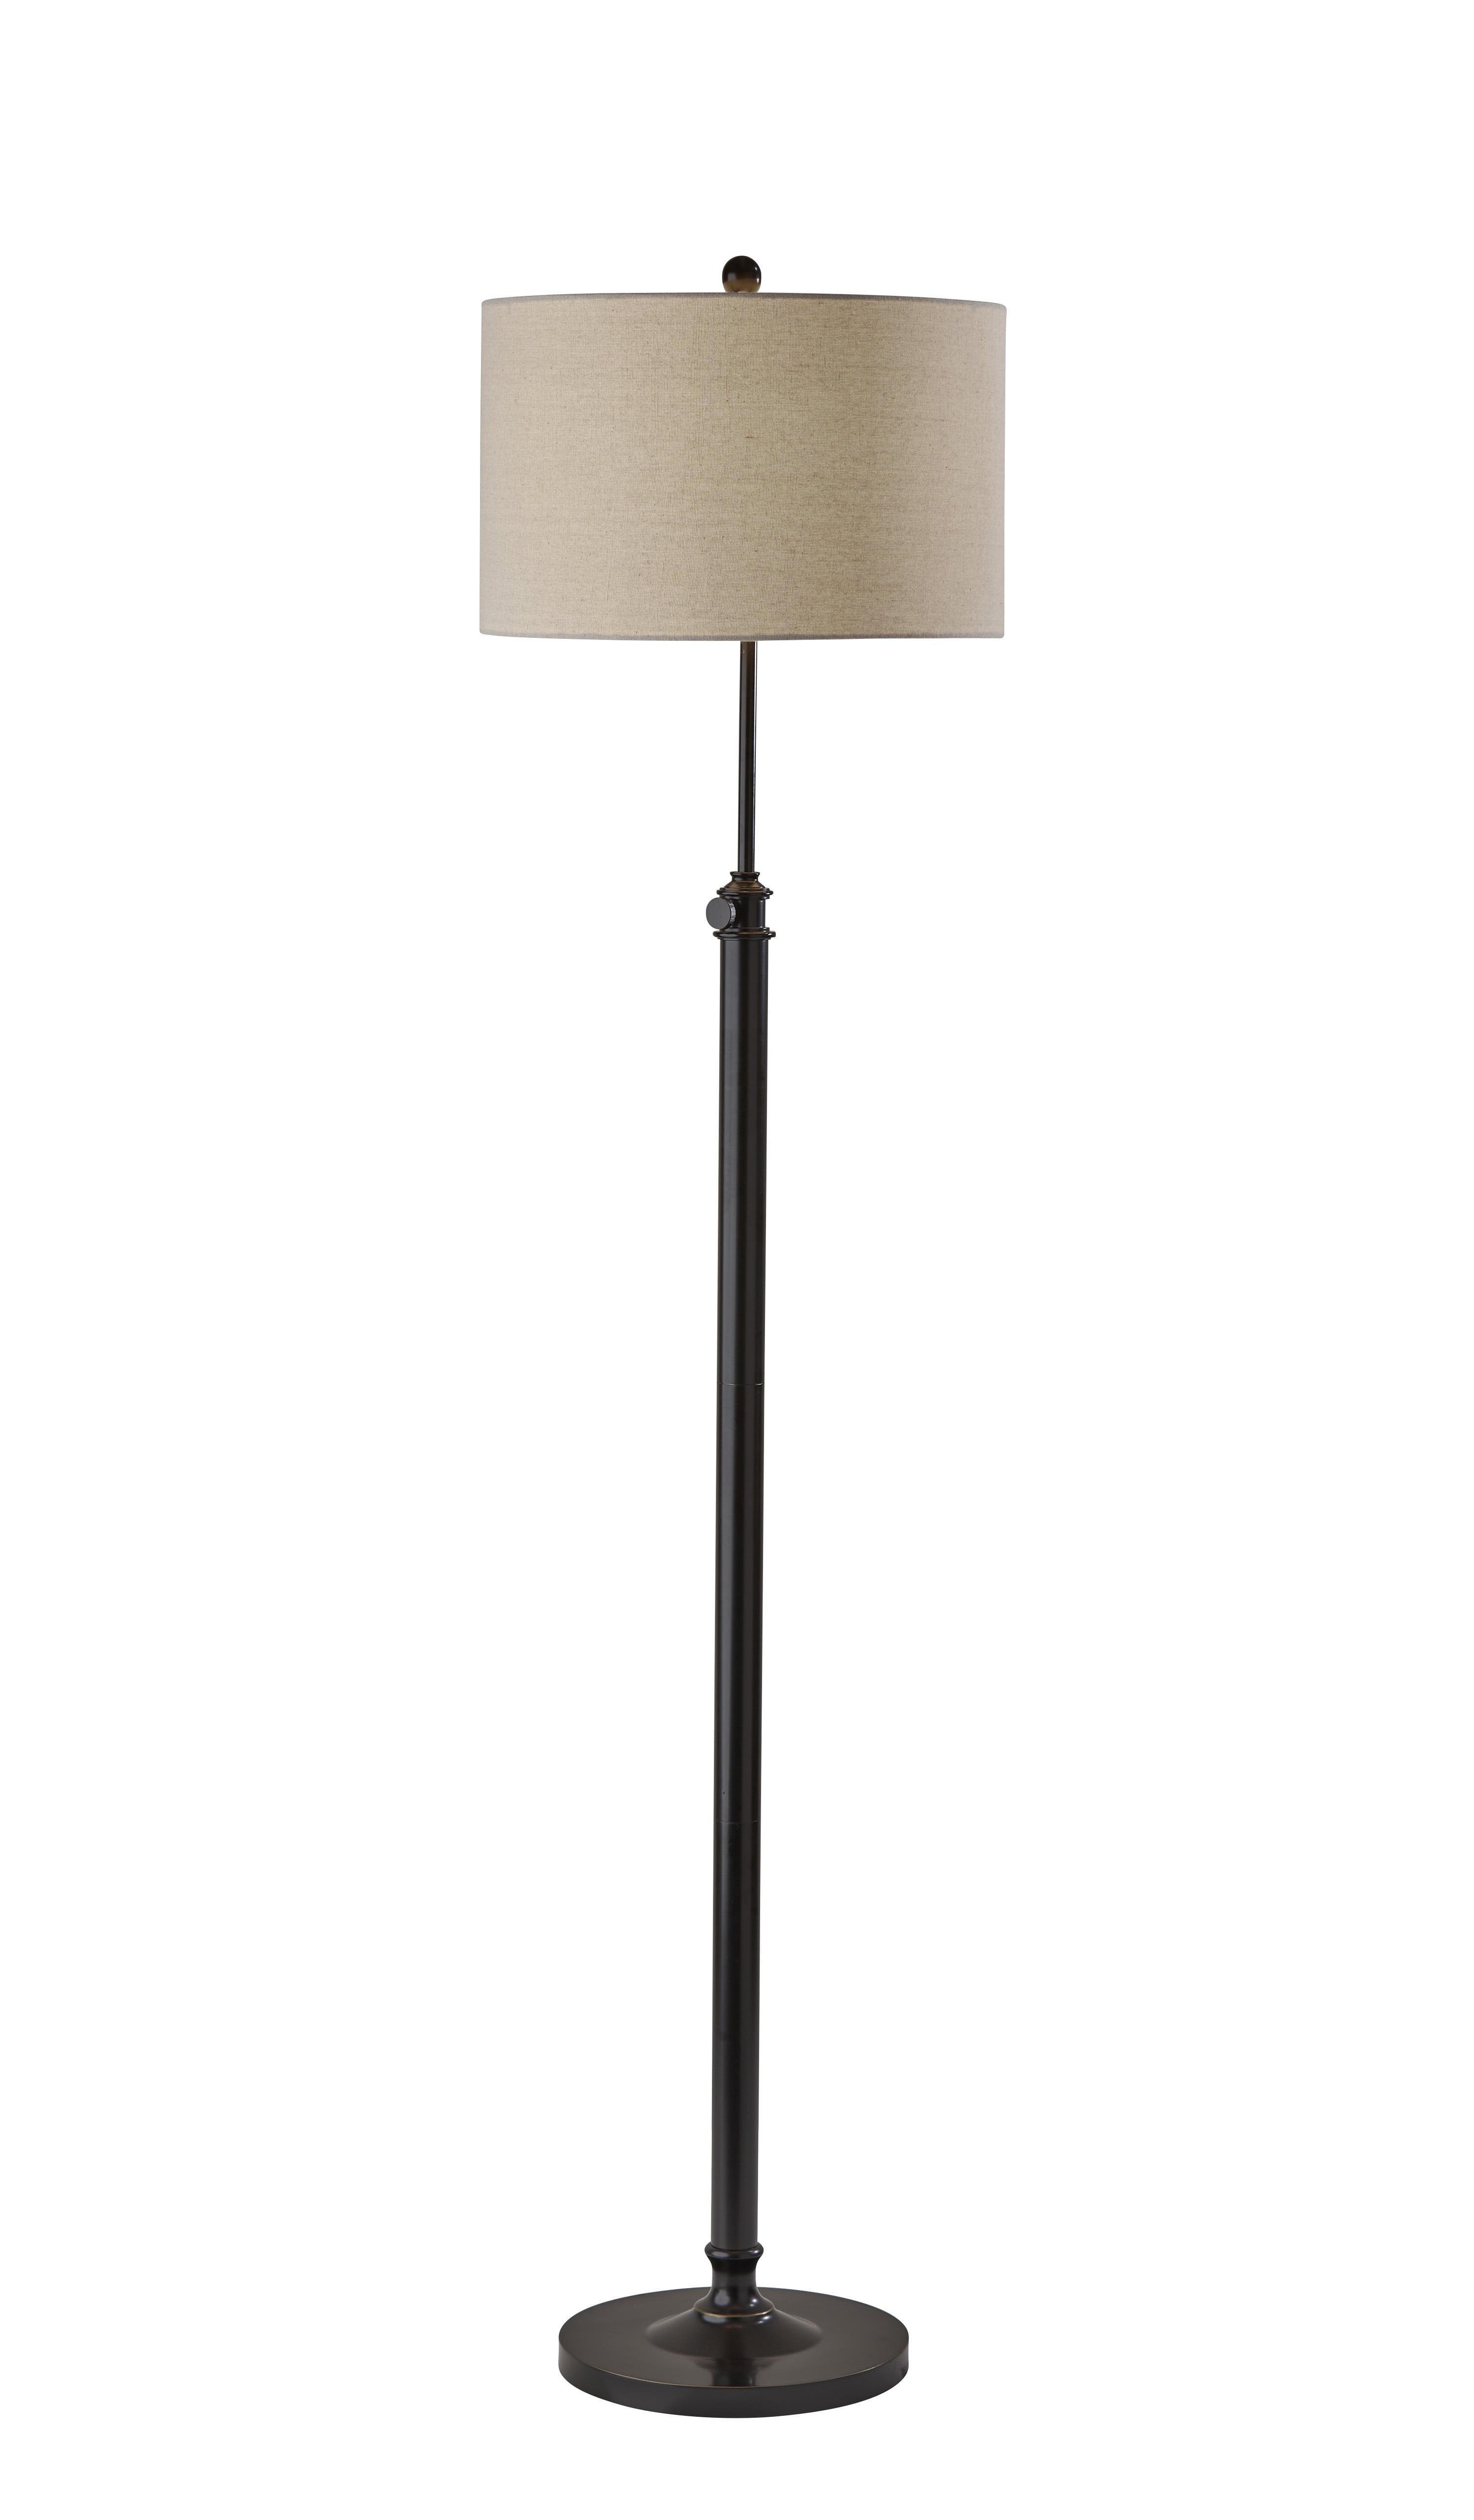 Adjustable Antique Bronze Floor Lamp with Oatmeal Linen Shade